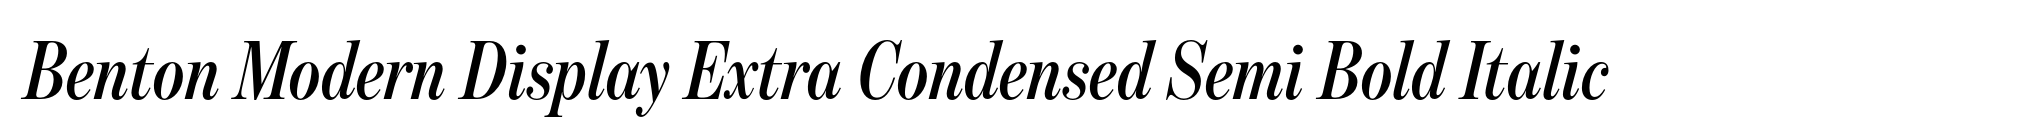 Benton Modern Display Extra Condensed Semi Bold Italic image